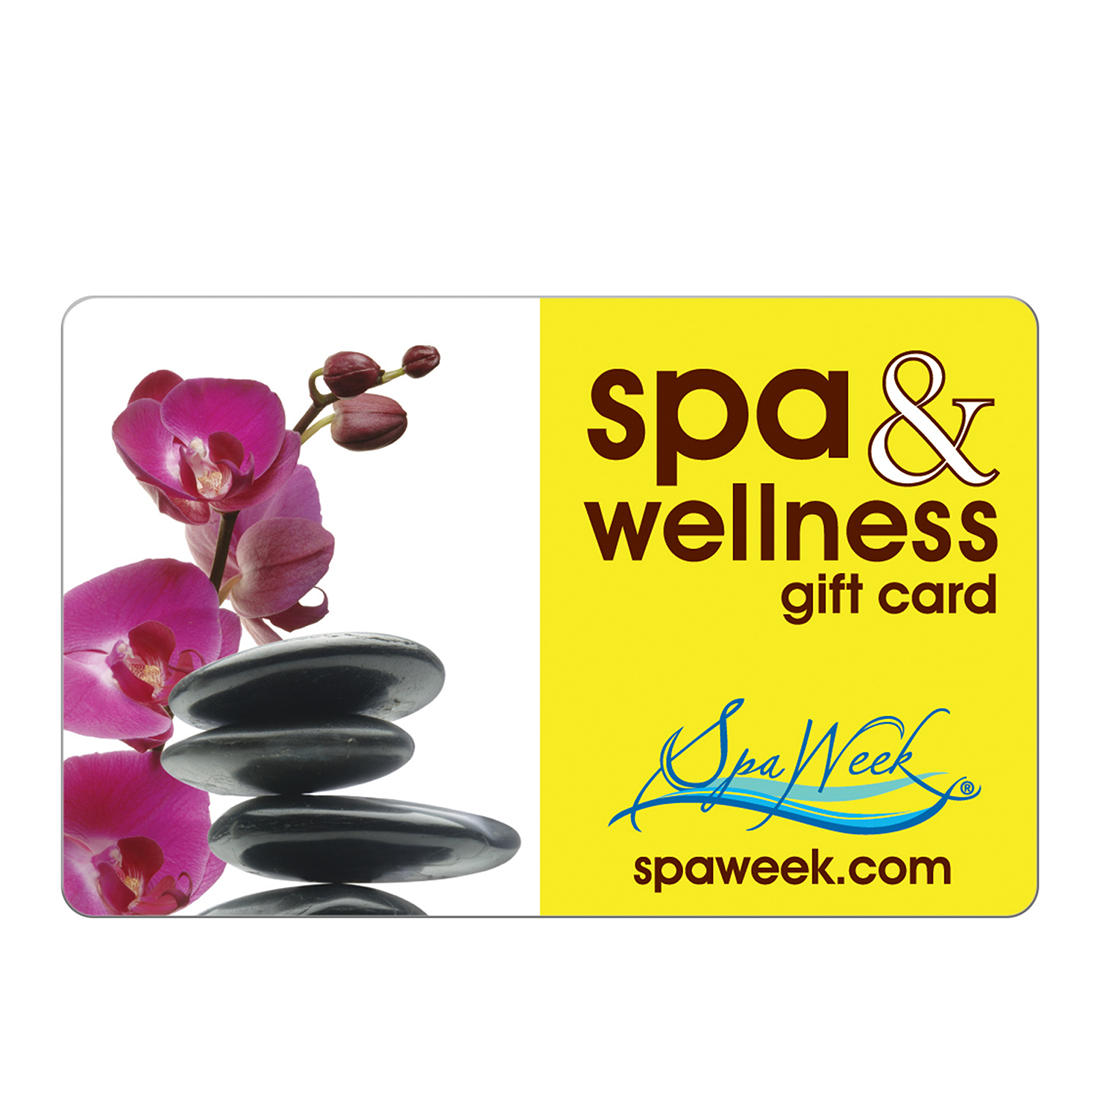 BJs Wholesale: 30.0% discount on Spa & Wellness by Spa Week